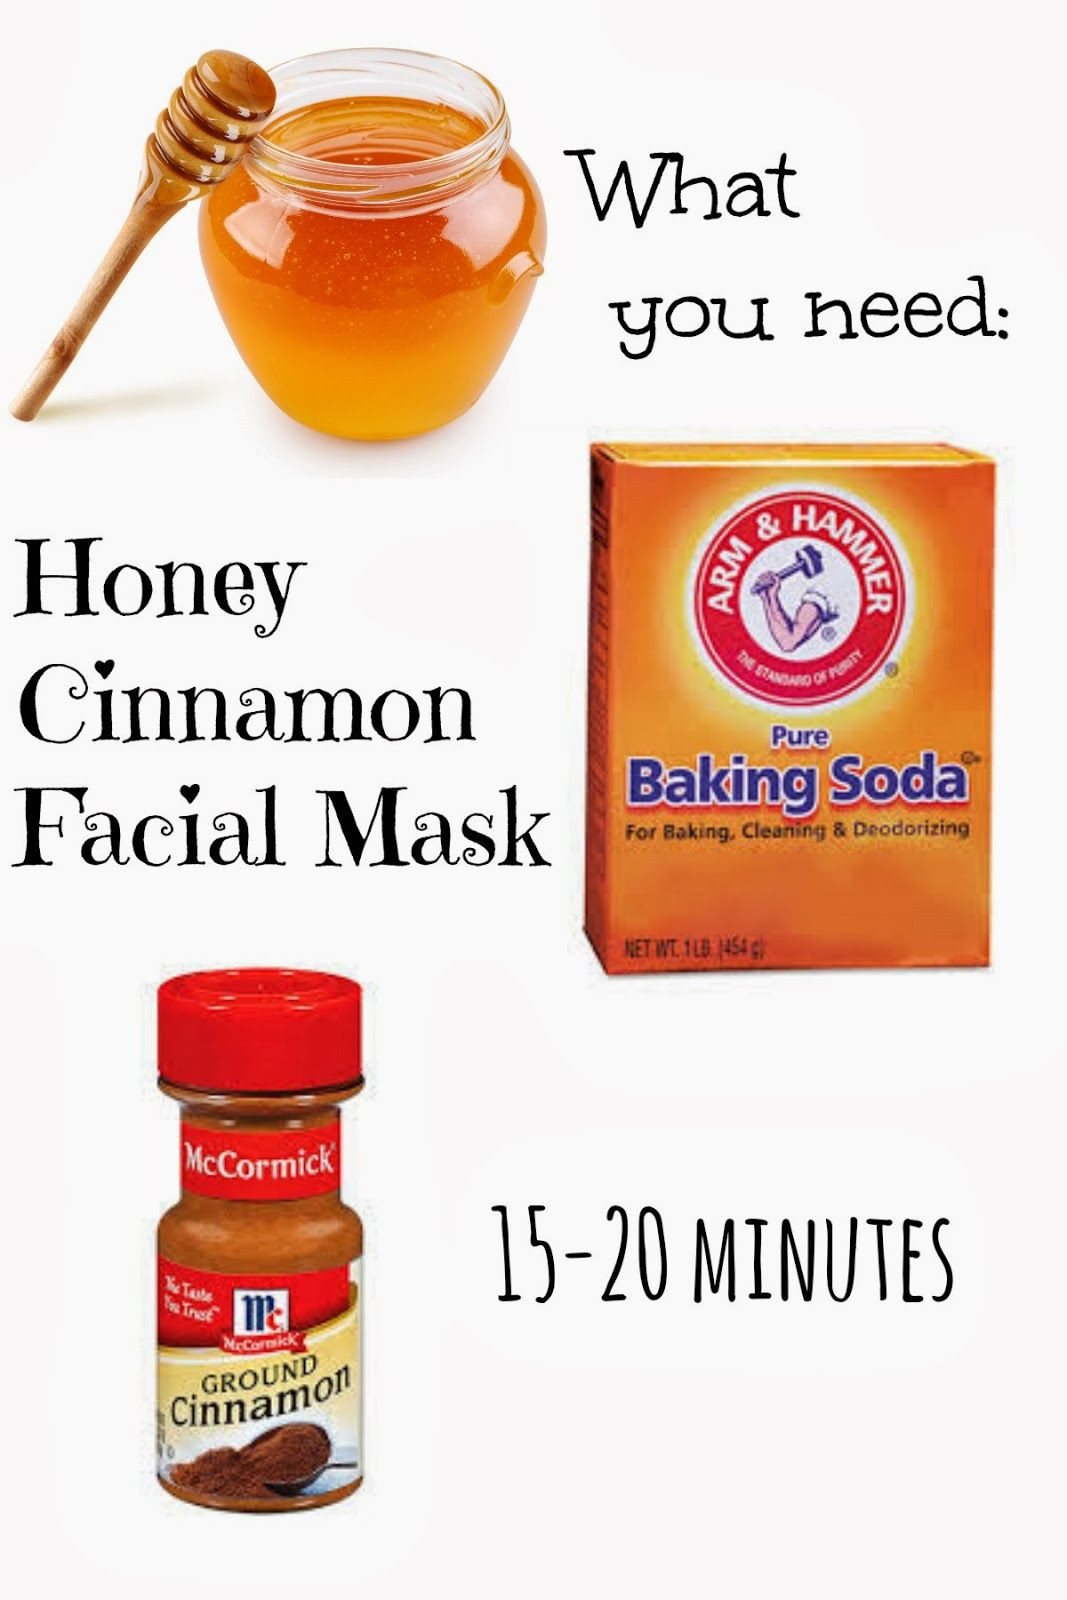 DIY Facemask For Pimples
 At Home DIY Honey Cinnamon Facial Mask